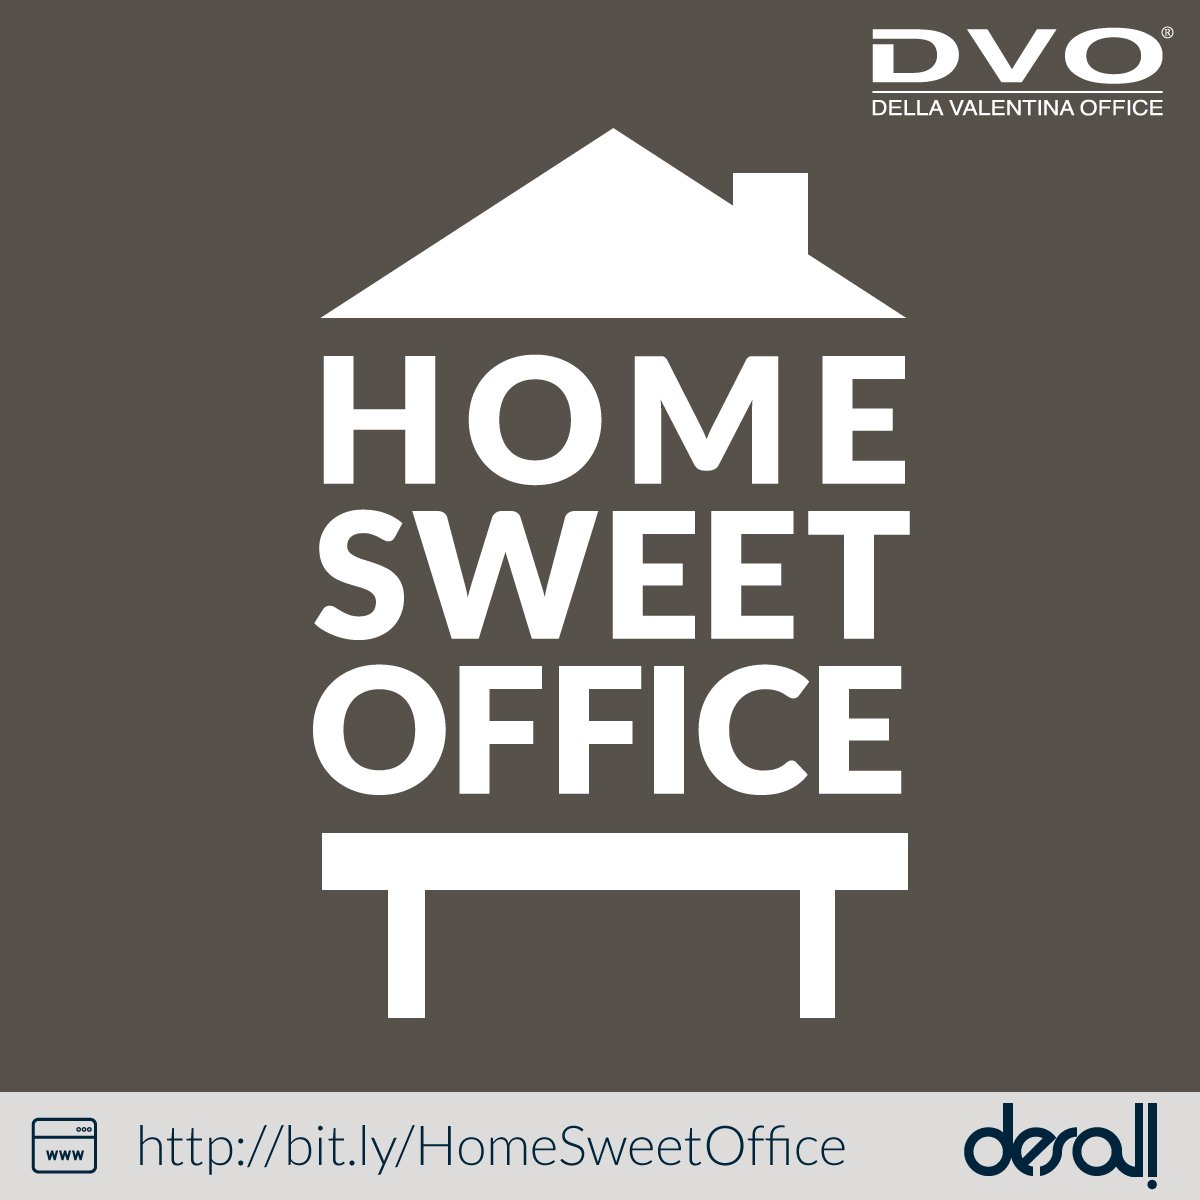 Desall Della Valentina Office Relies On Desallcom For Openinnovation Office Furniture Design T Co Nhg9cbpnvj